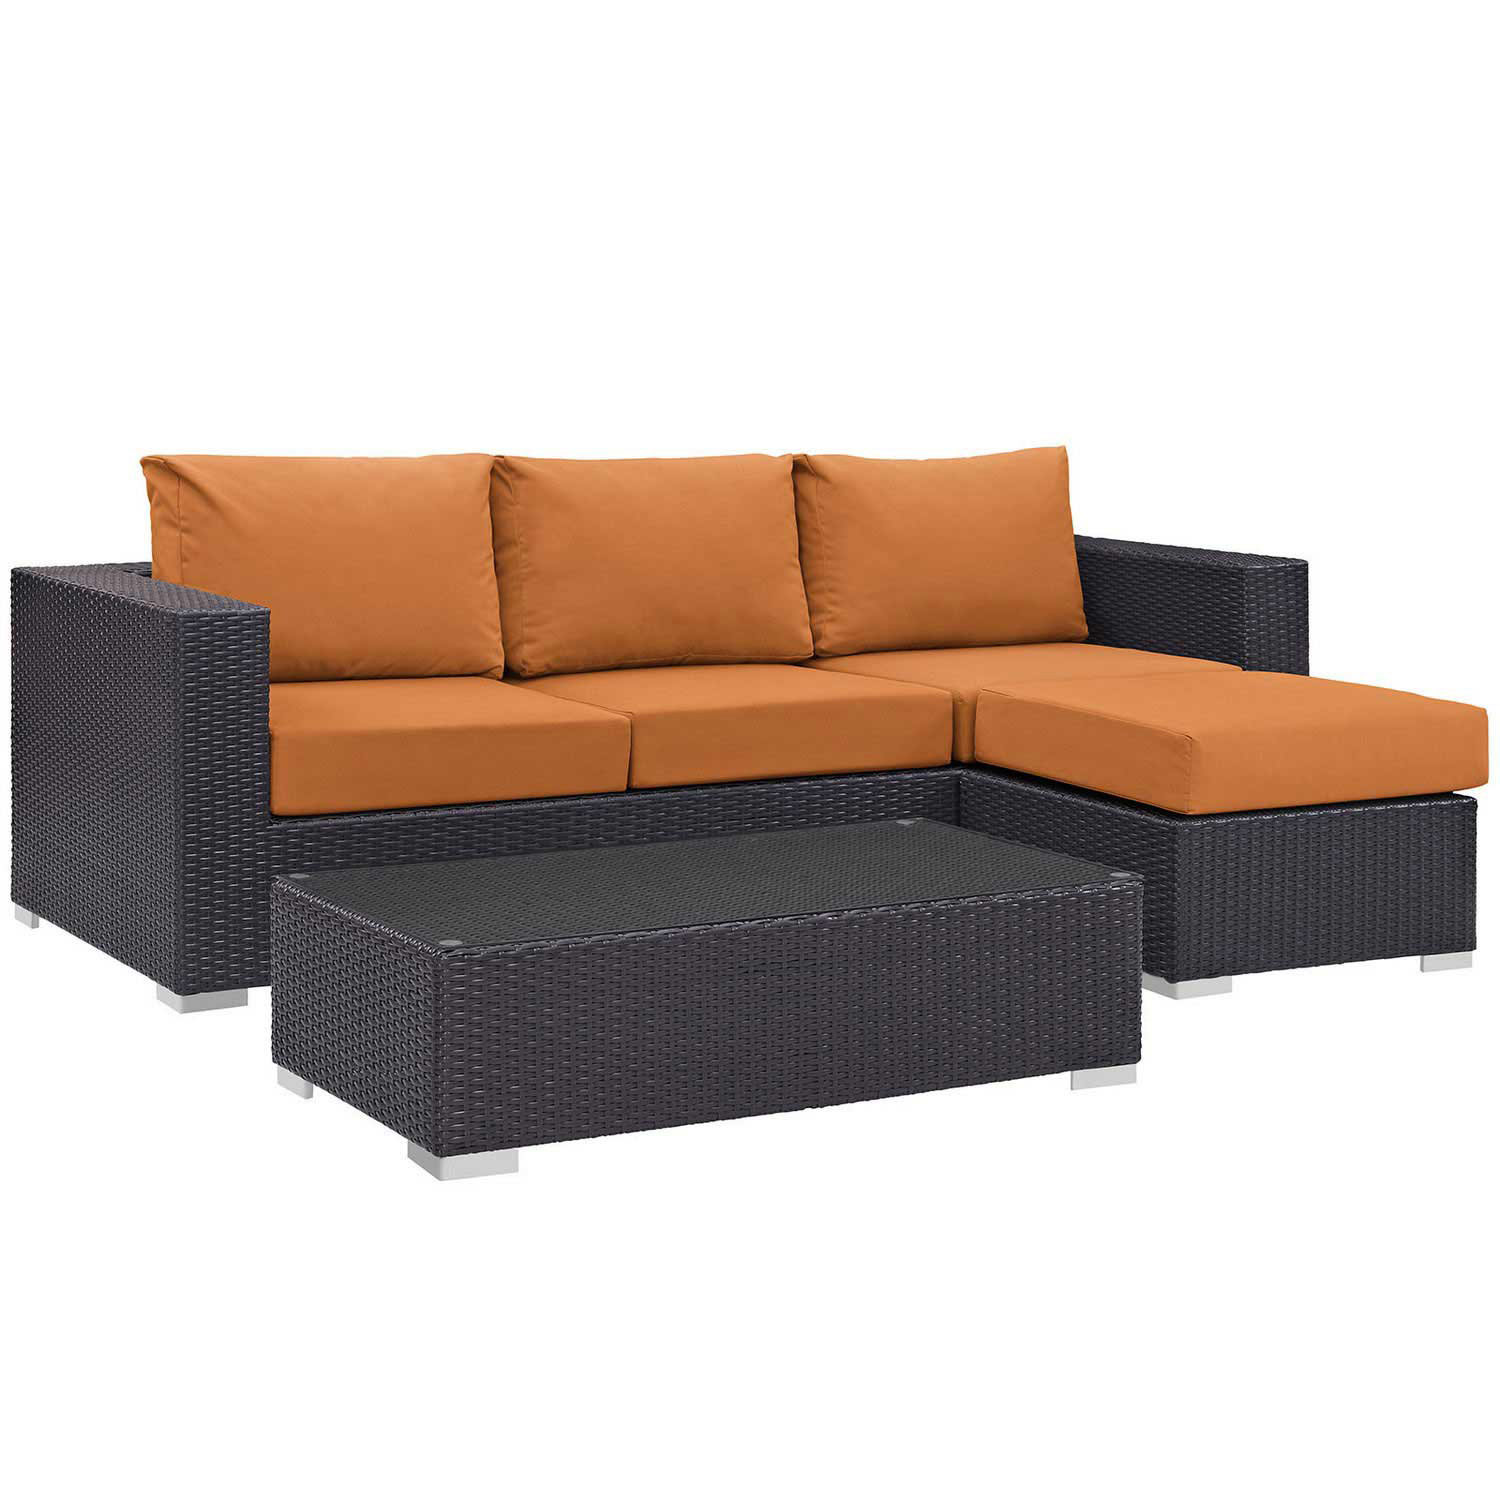 Modway Convene 3 Piece Outdoor Patio Sofa Set - Espresso Orange